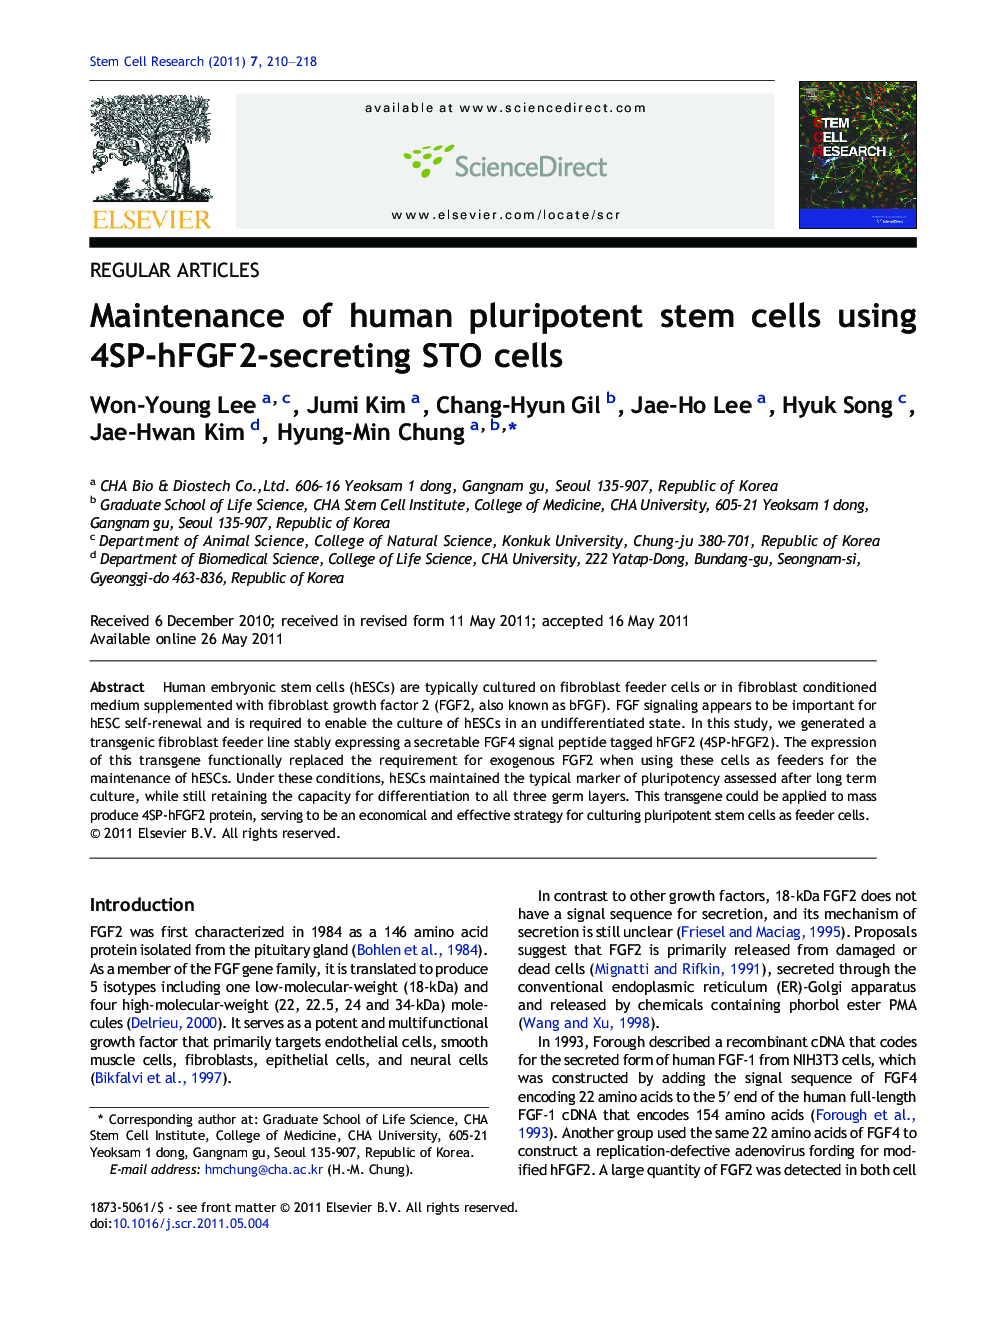 Maintenance of human pluripotent stem cells using 4SP-hFGF2-secreting STO cells